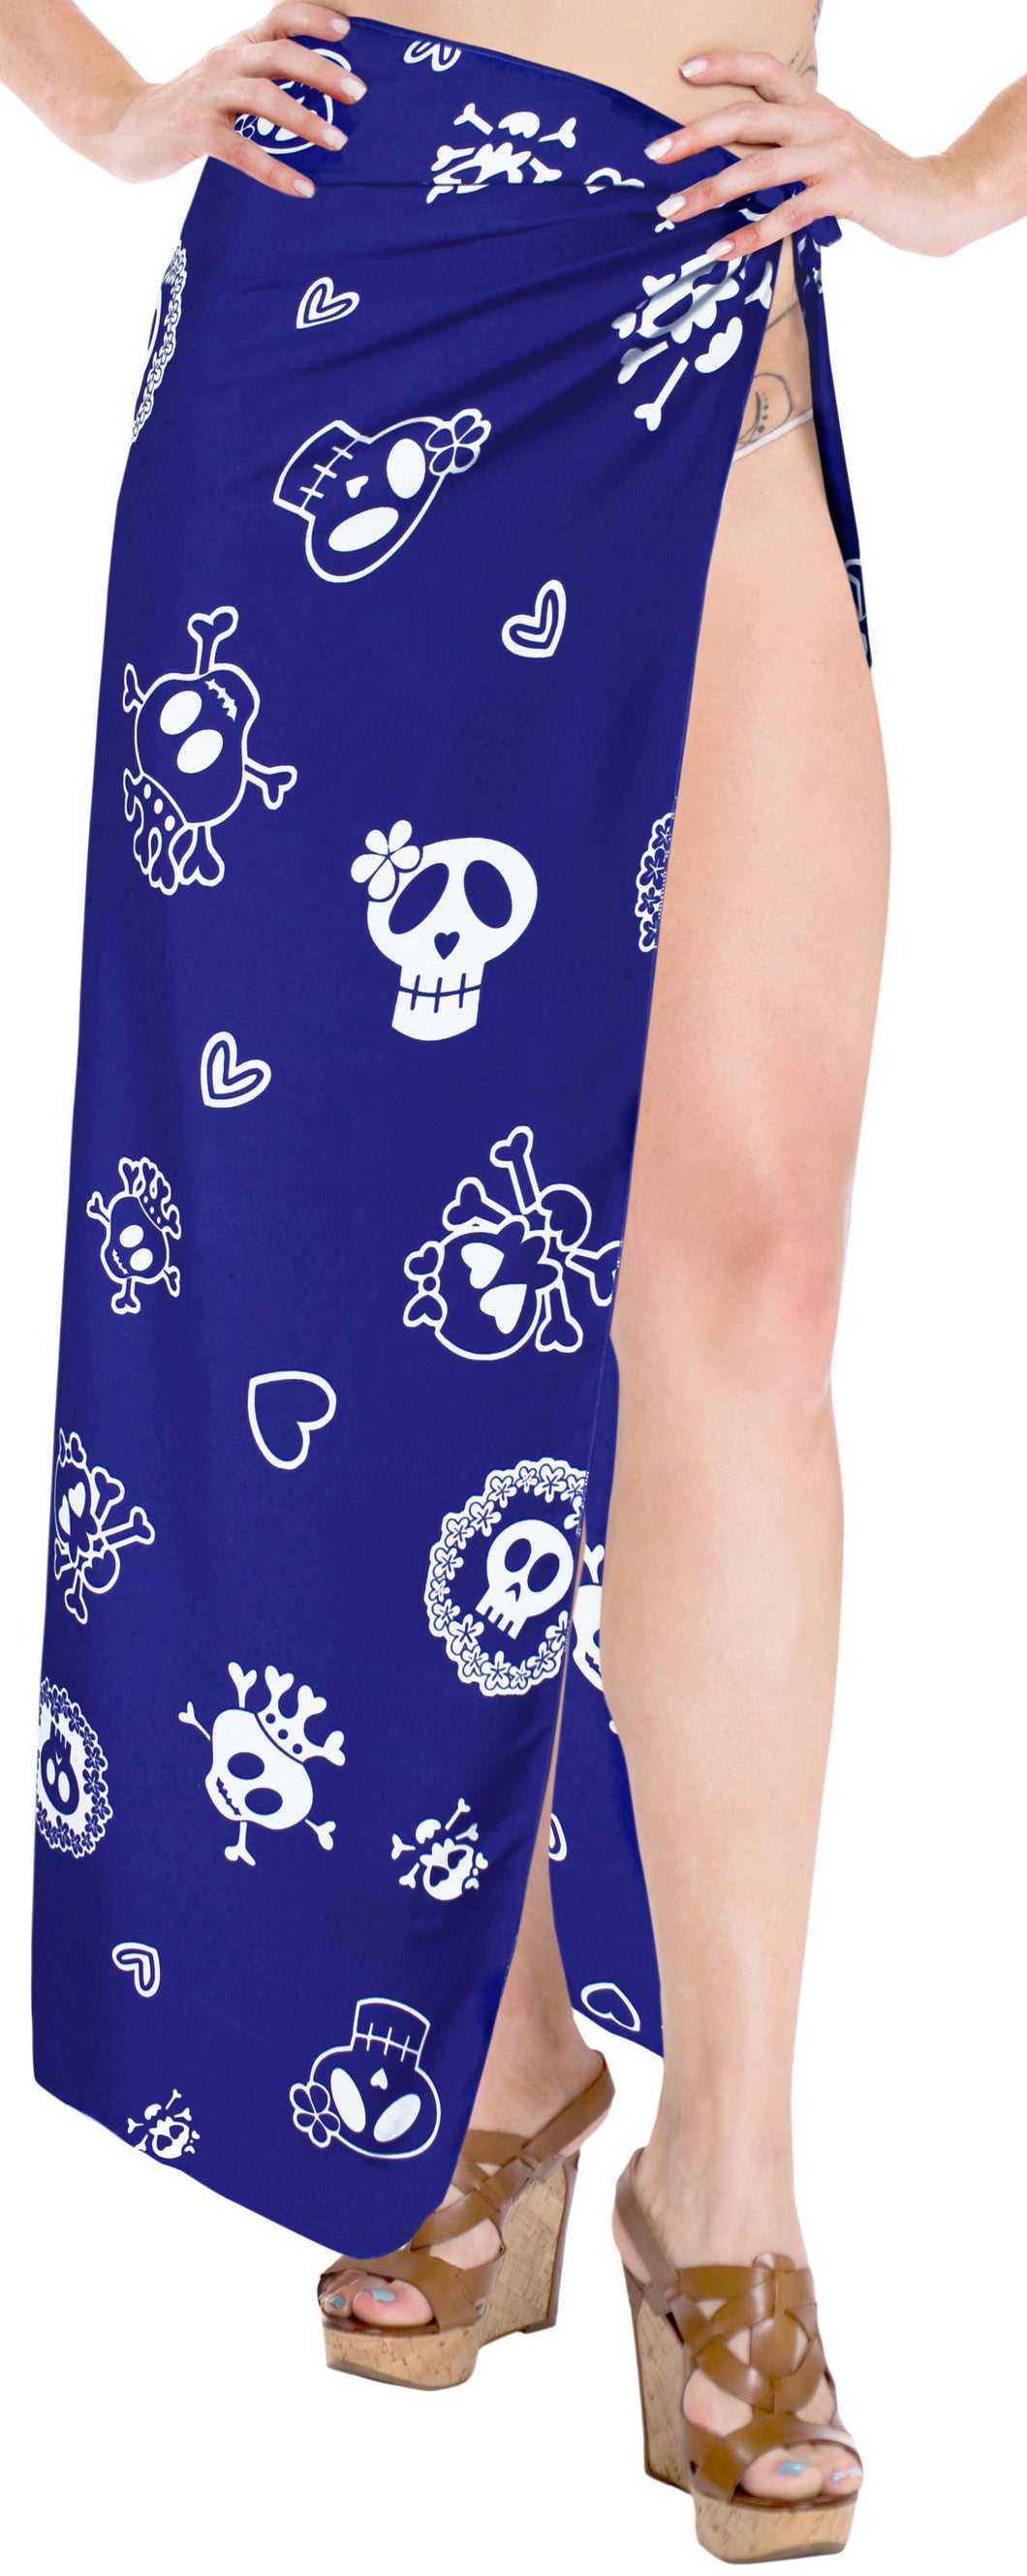 LA LEELA Women Halloween Skulls Skeleton Swimsuit Cover Up Beach Sarong Wrap Skirt One Size Blue_B873